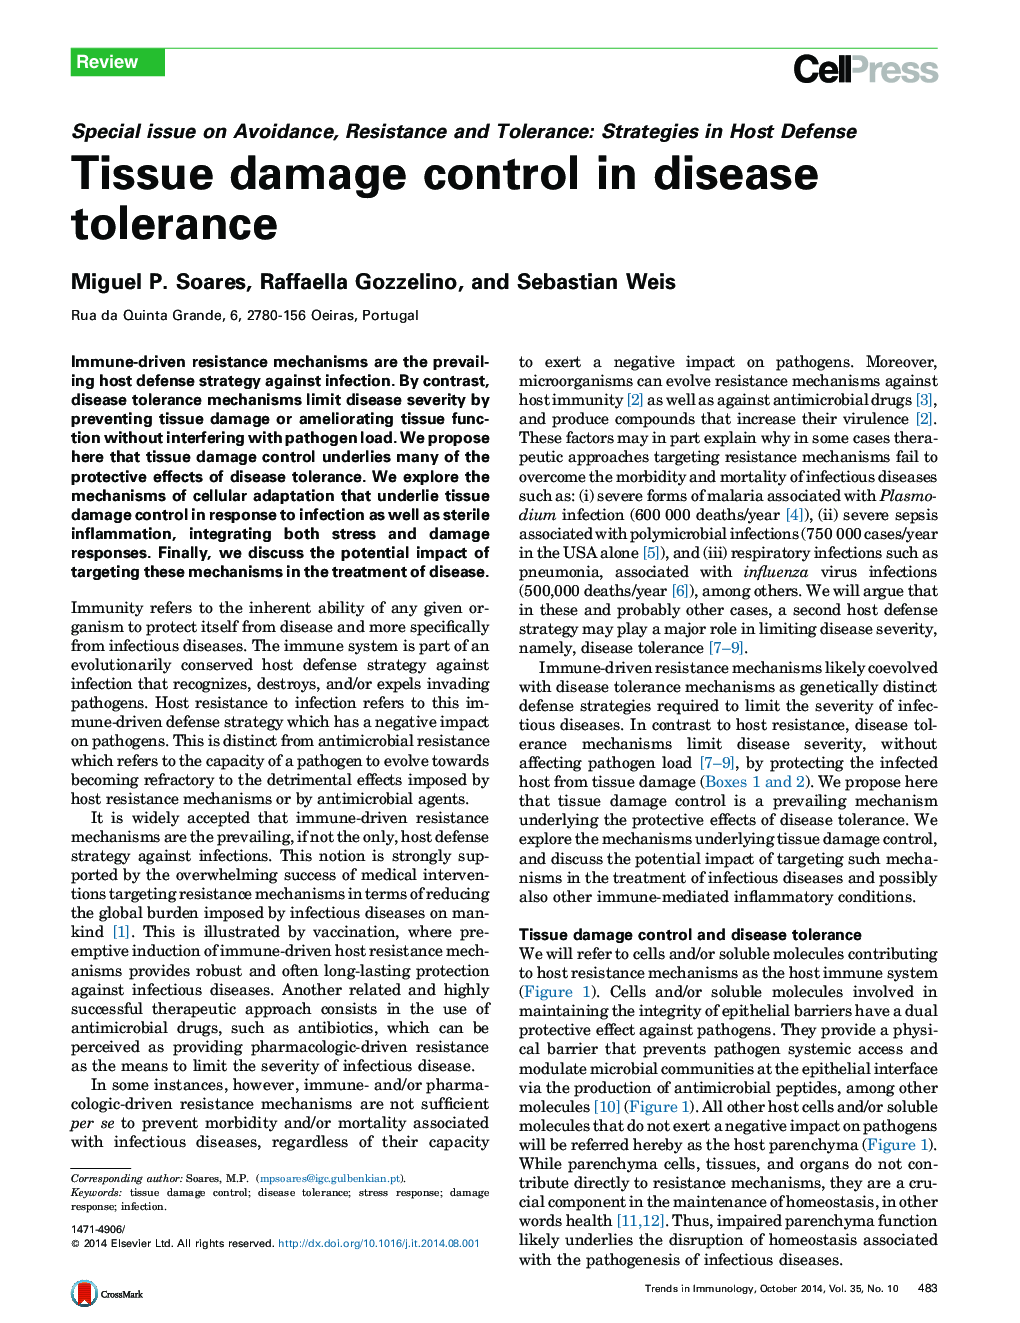 Tissue damage control in disease tolerance